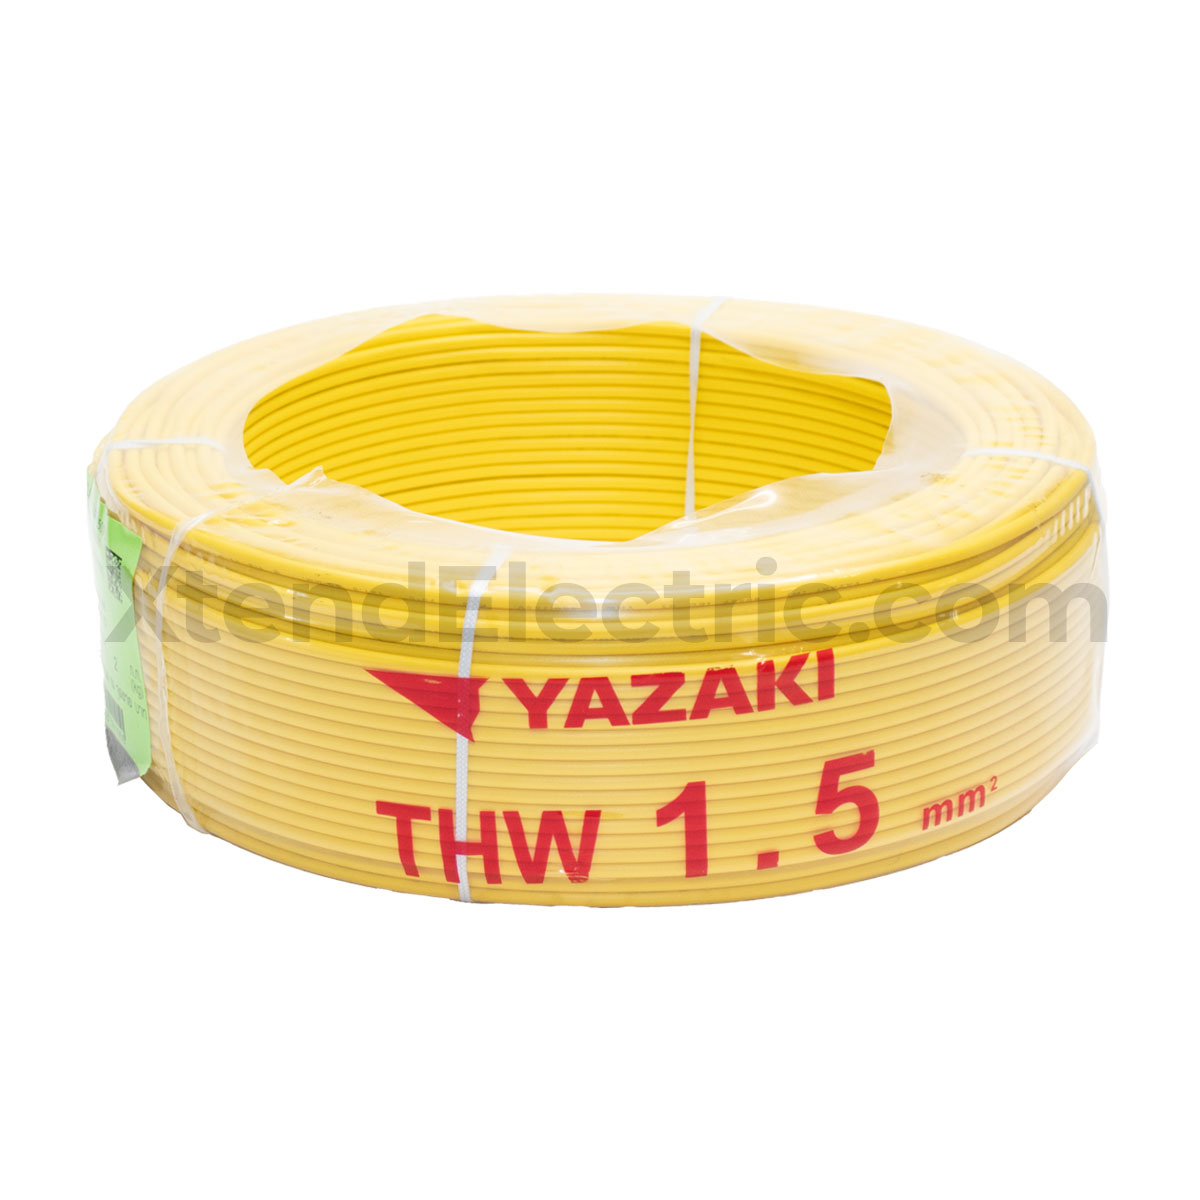 Yazaki-15-Yellow-02